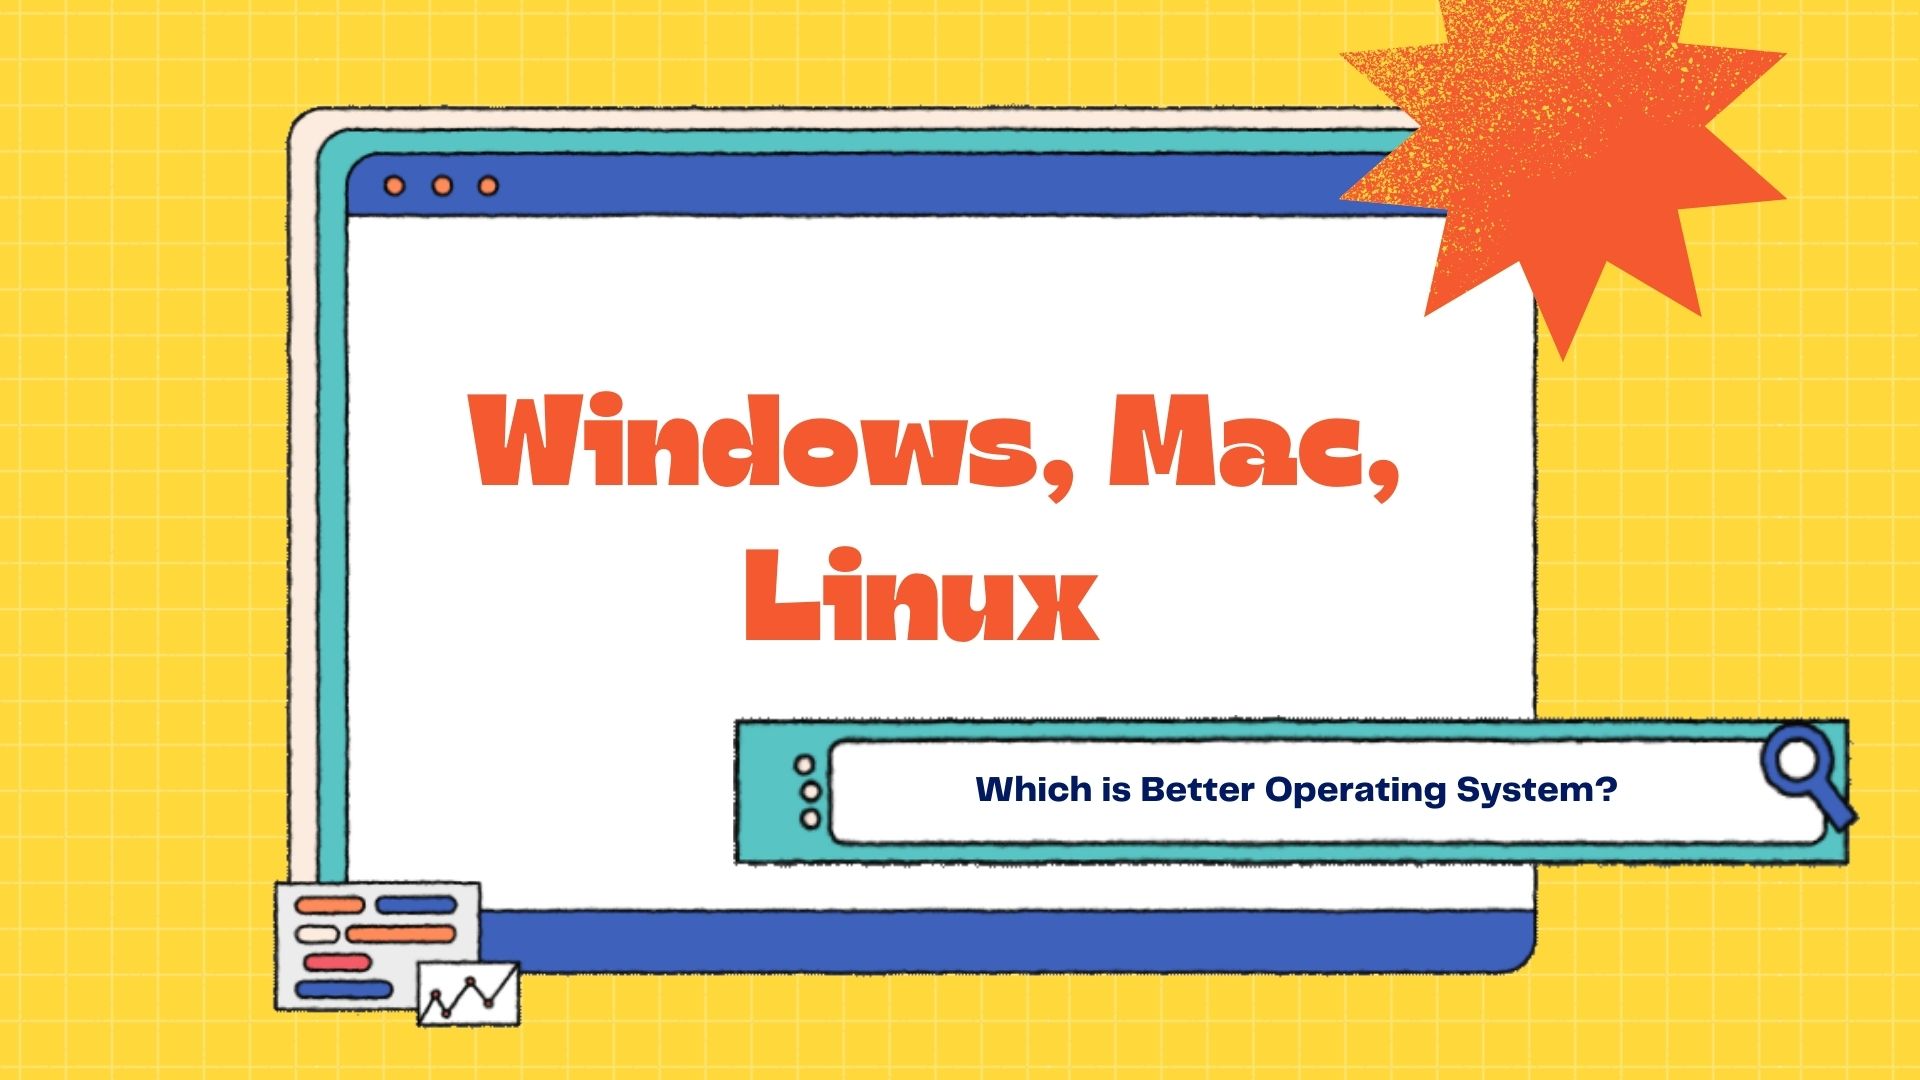 Windows, Mac, Linux Operating System